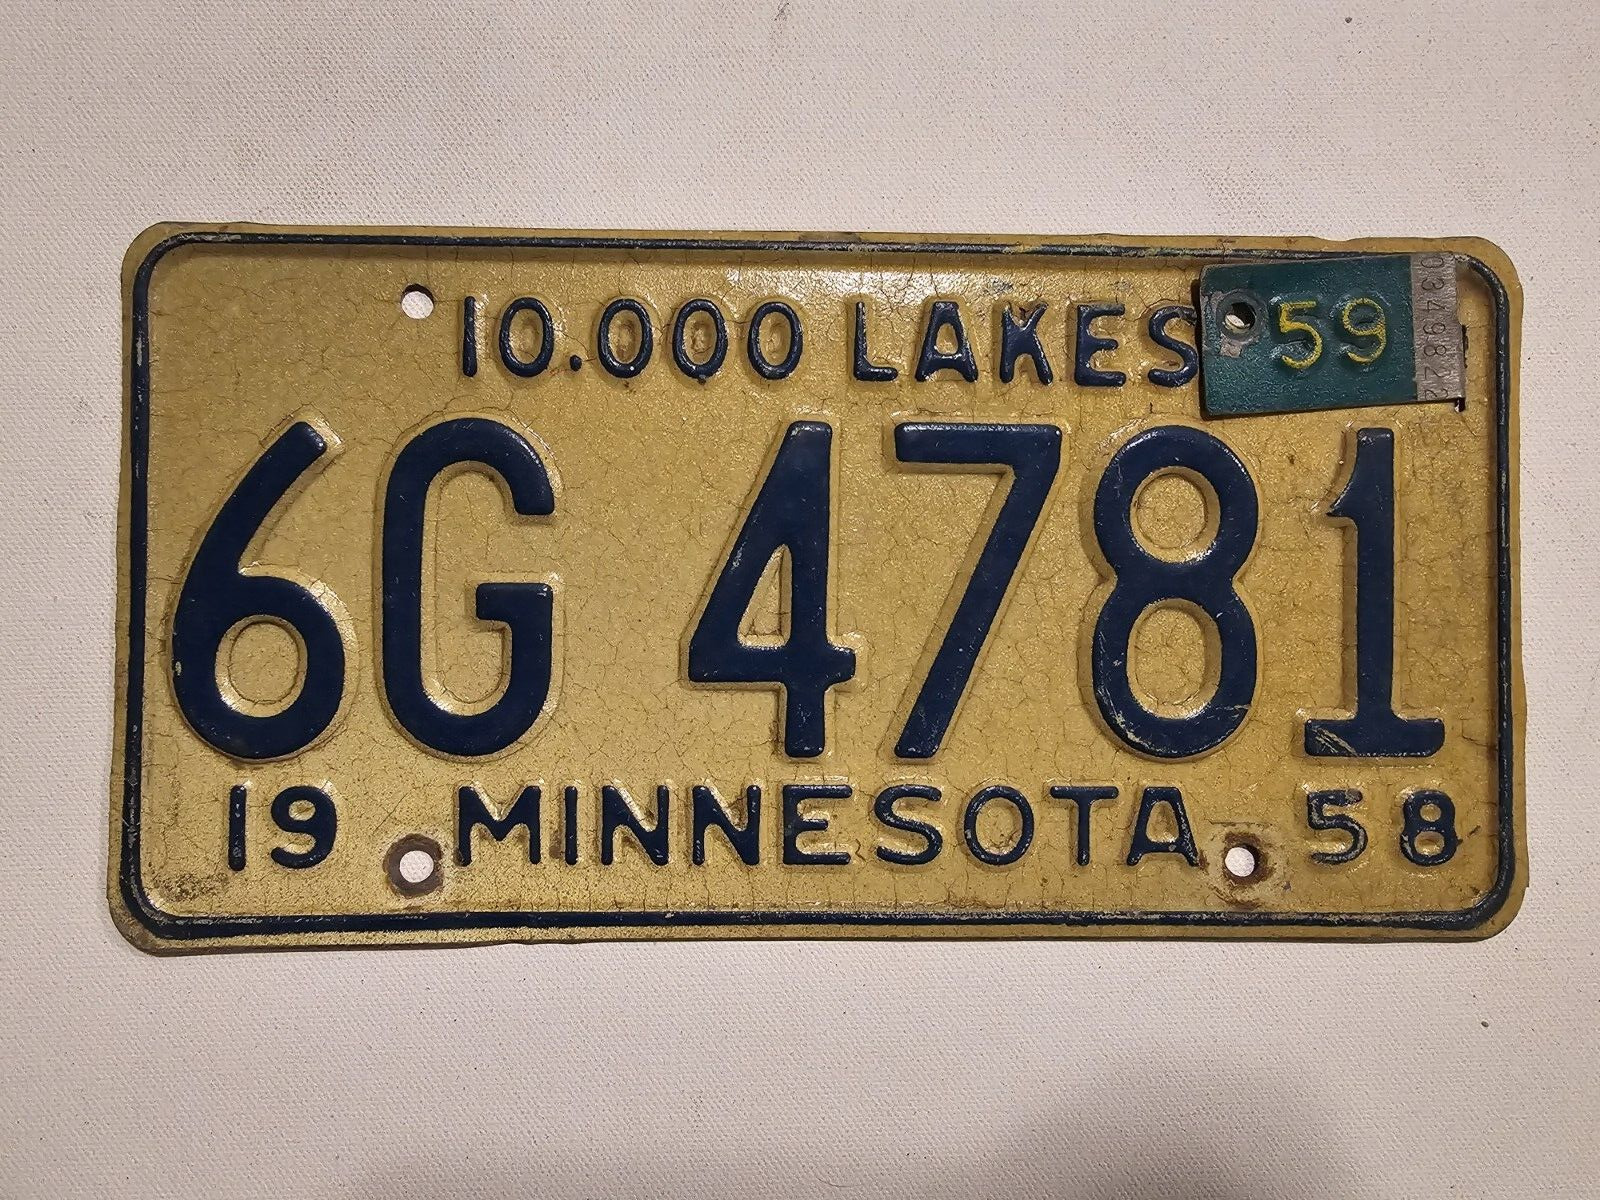 1958 Minnesota License Plate-6G 4781 w/tag 1959-Vintage-Man Cave-Decor-Shop